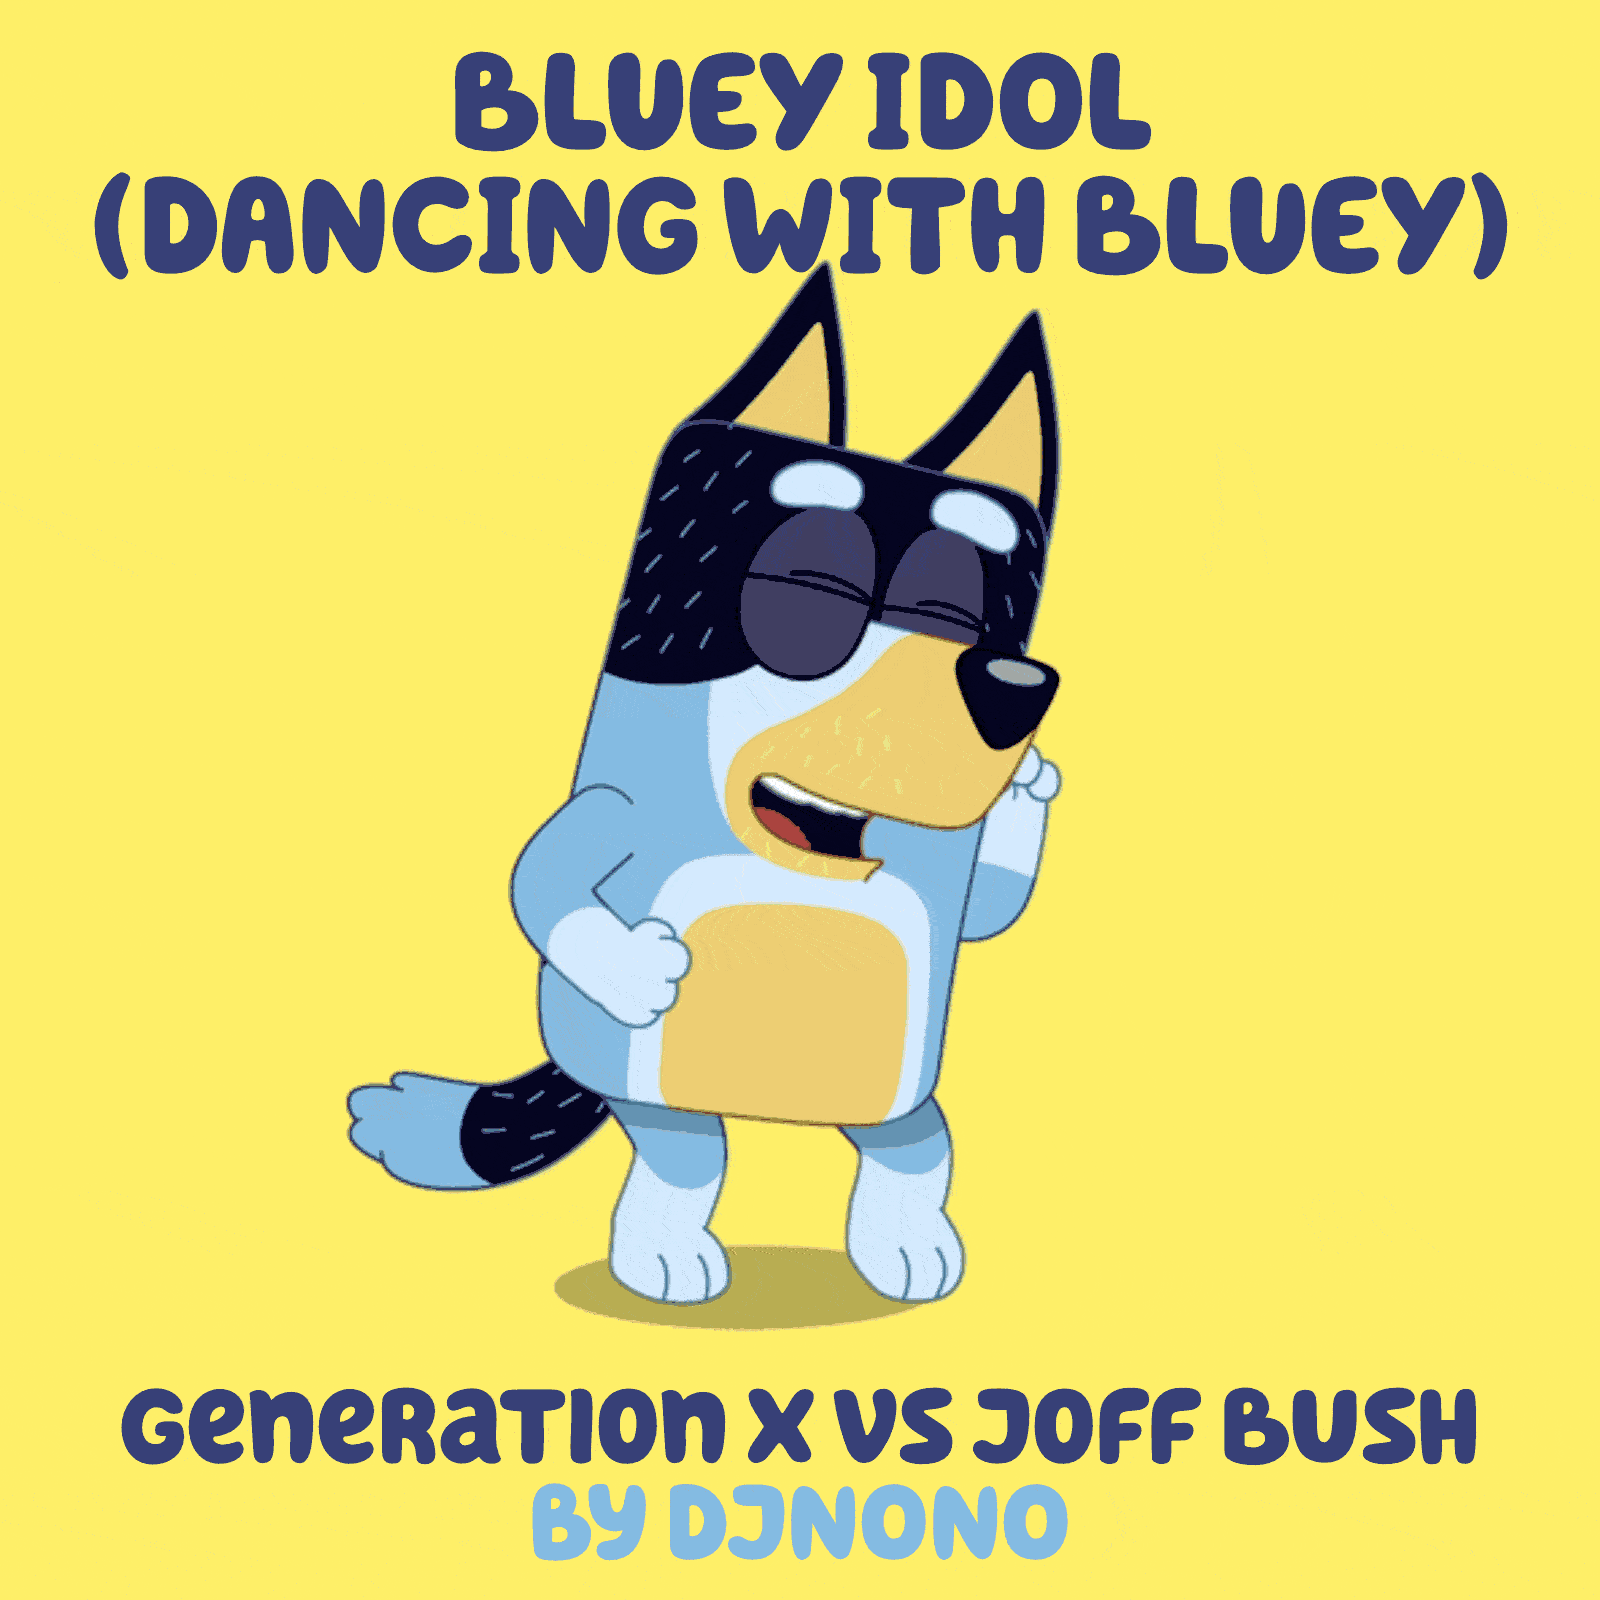 DJNoNo - Bluey Idol (Dancing With Bluey) (Generation X vs Joff Bush) animated gif mashup cover bandit dancing